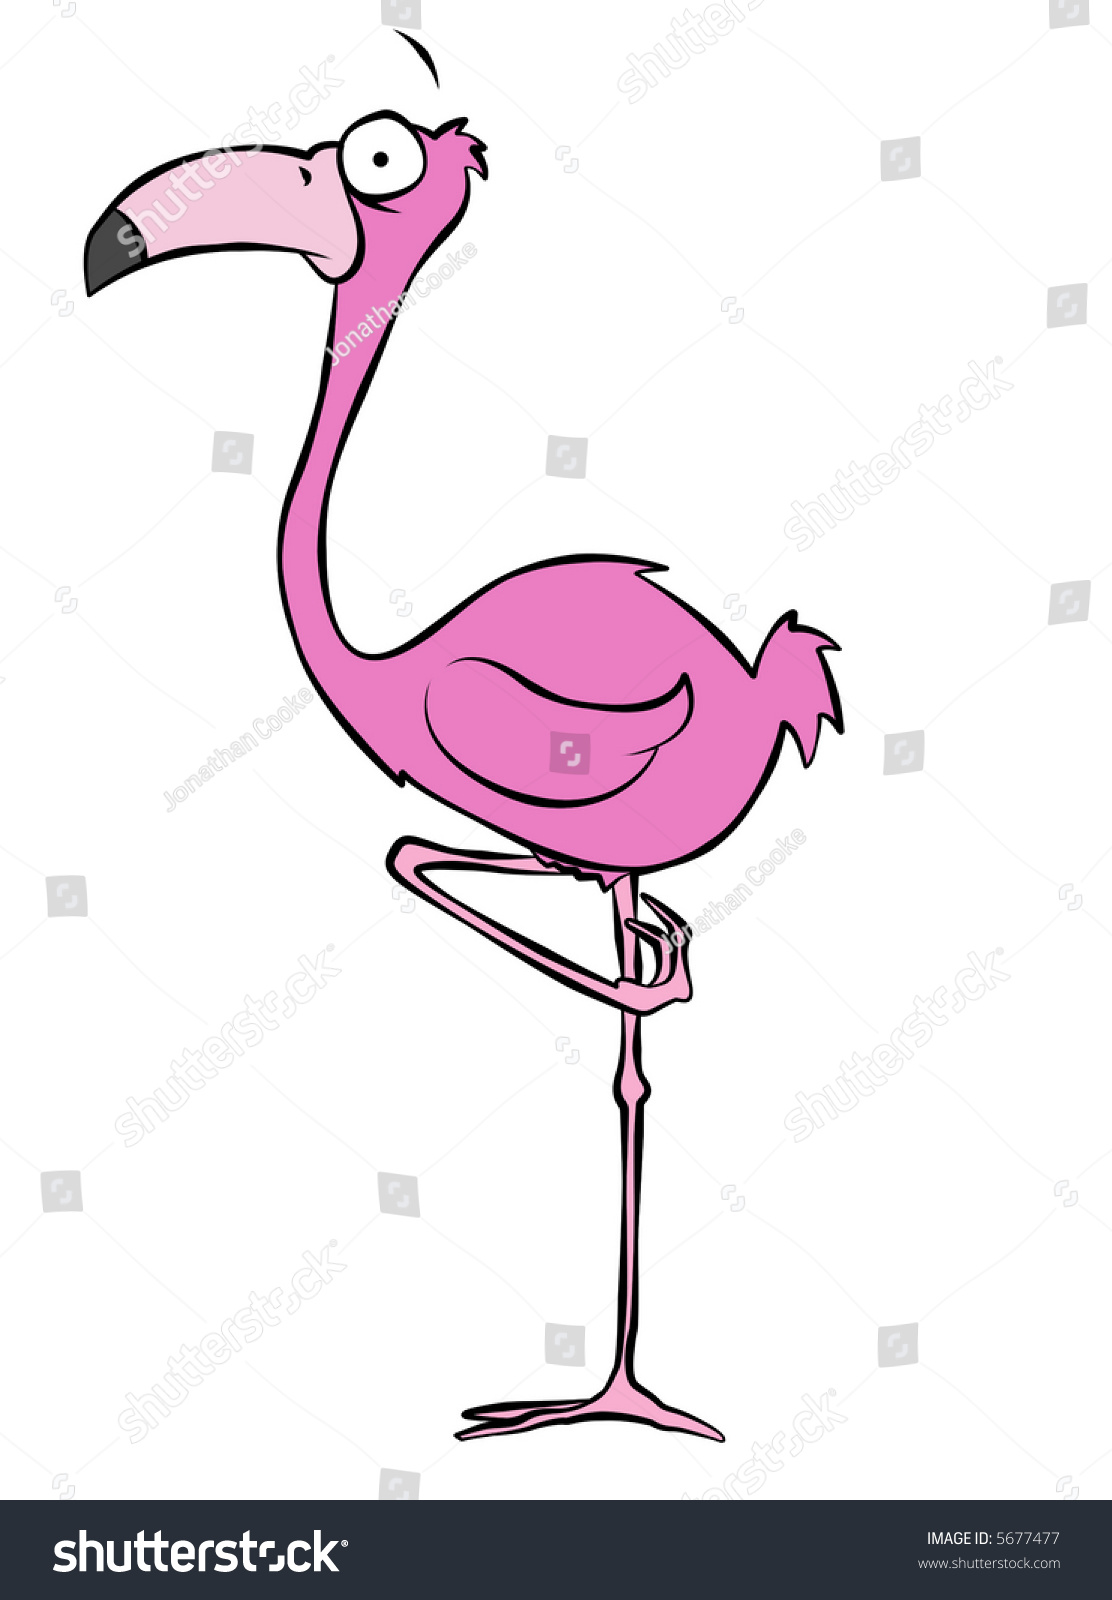 stock-photo-a-cartoon-flamingo-on-one-leg-5677477.jpg